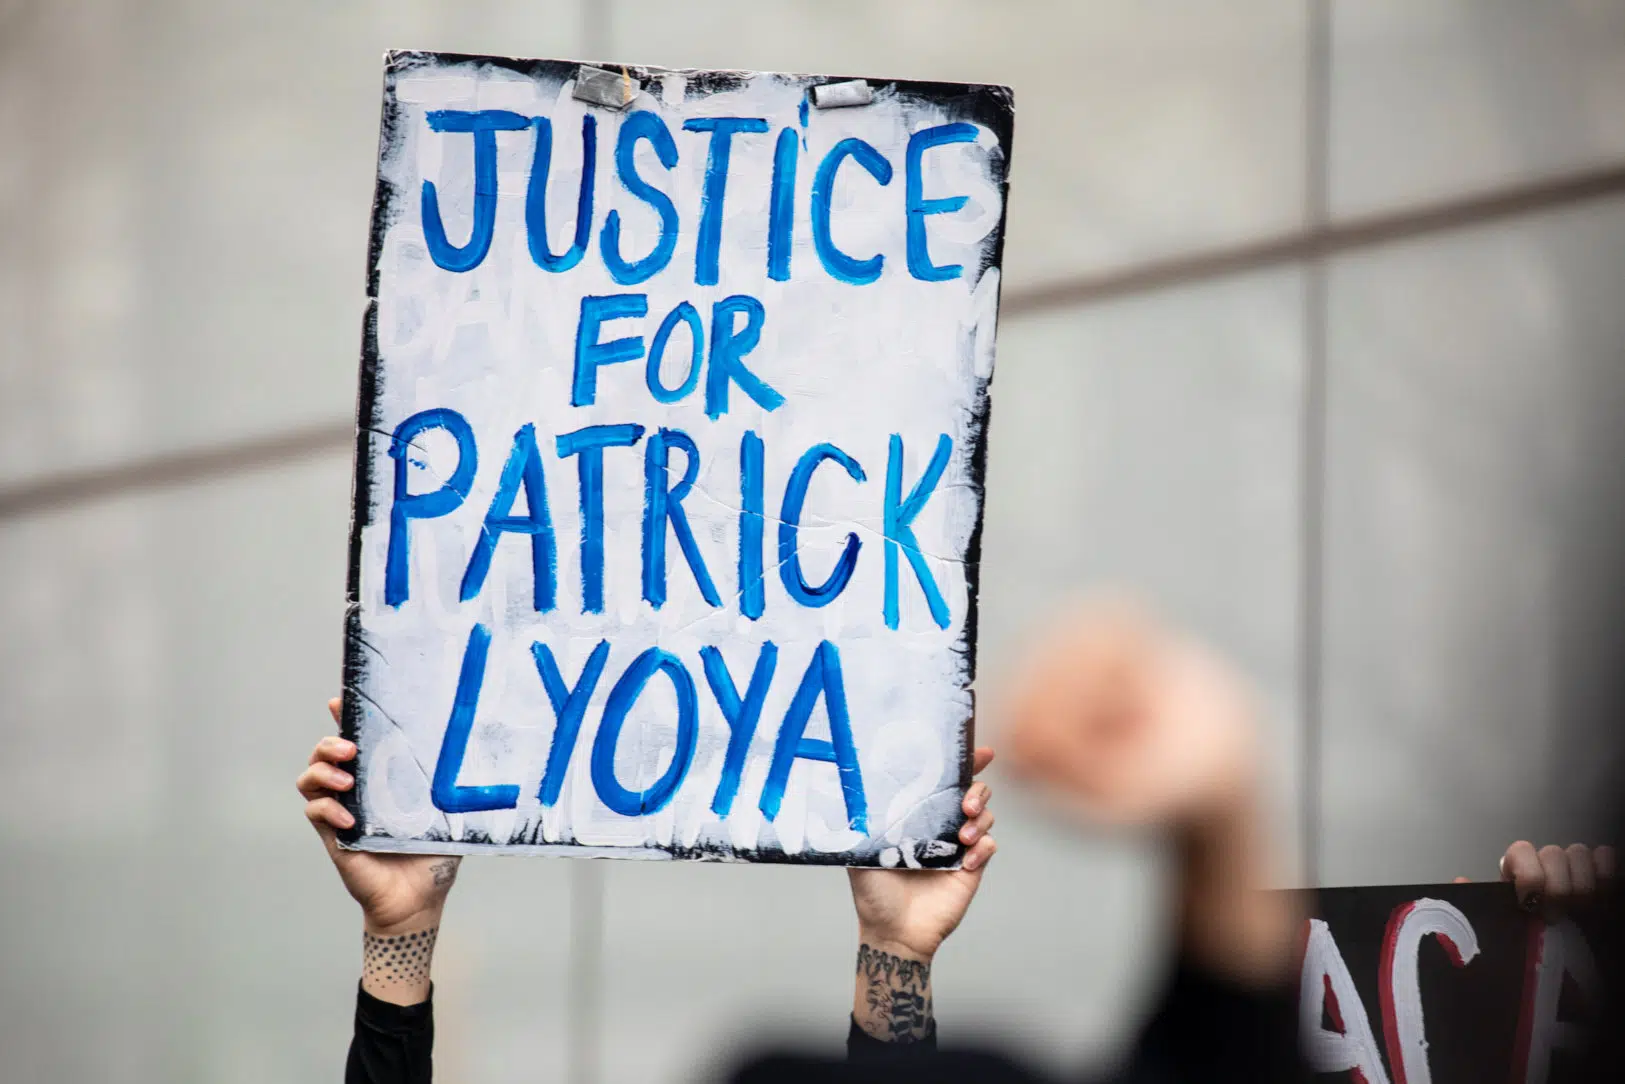 Videos Show Patrick Lyoya Shot in Head by Michigan Officer